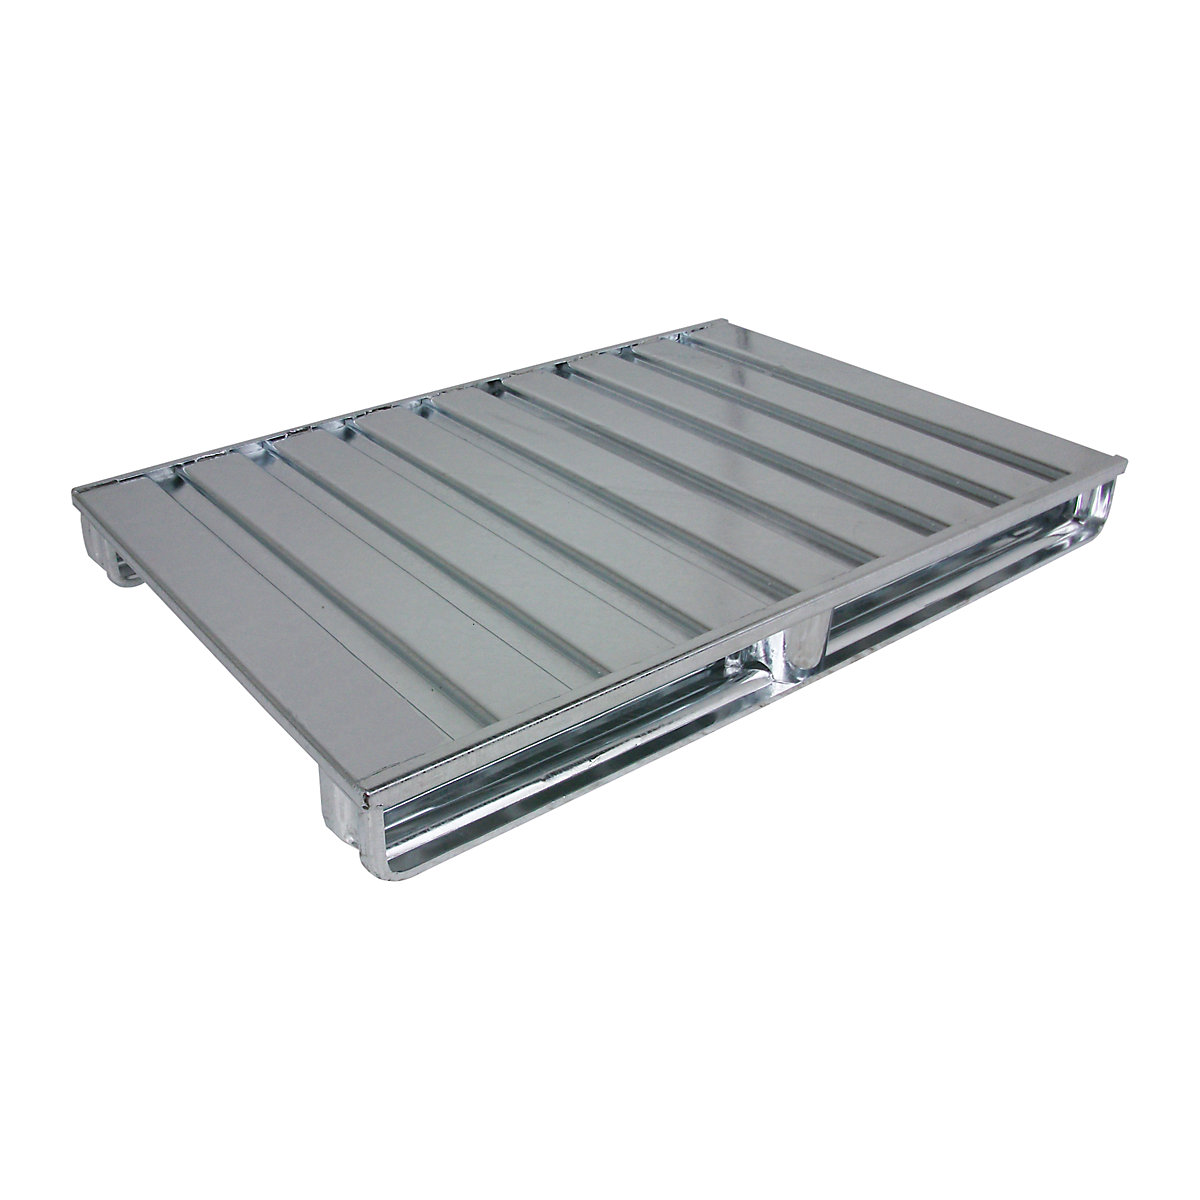 Palet plano de acero – Heson, L x A 1200 x 800 mm, carga máx. 2000 kg, galvanizado-1